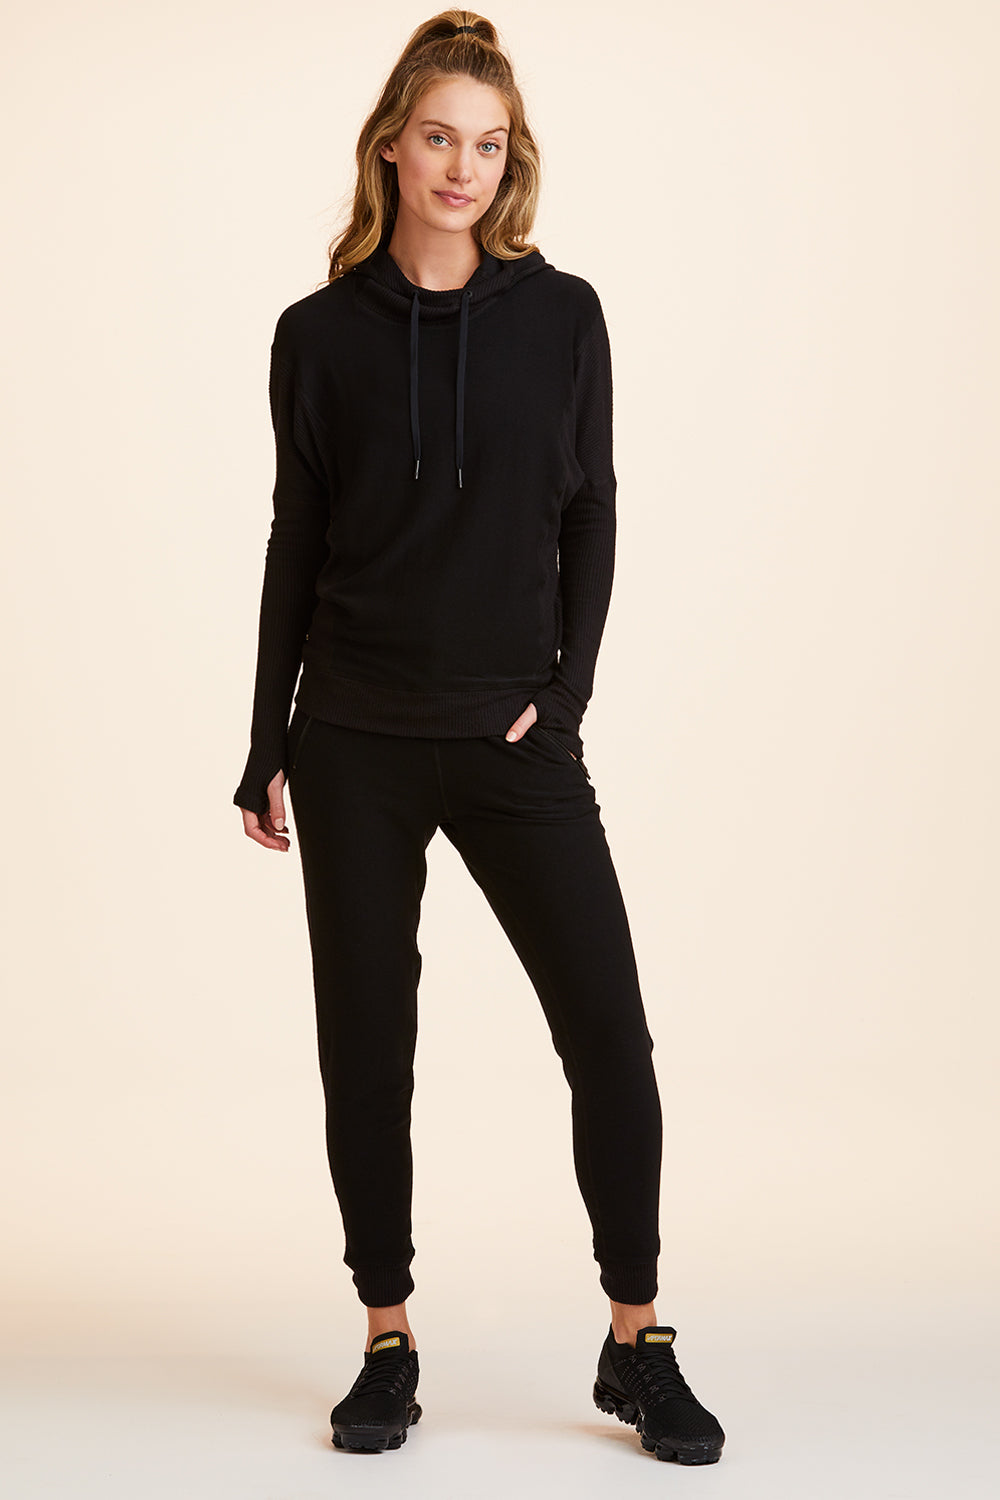 Front view of Alala Women's Luxury Athleisure black hoodie